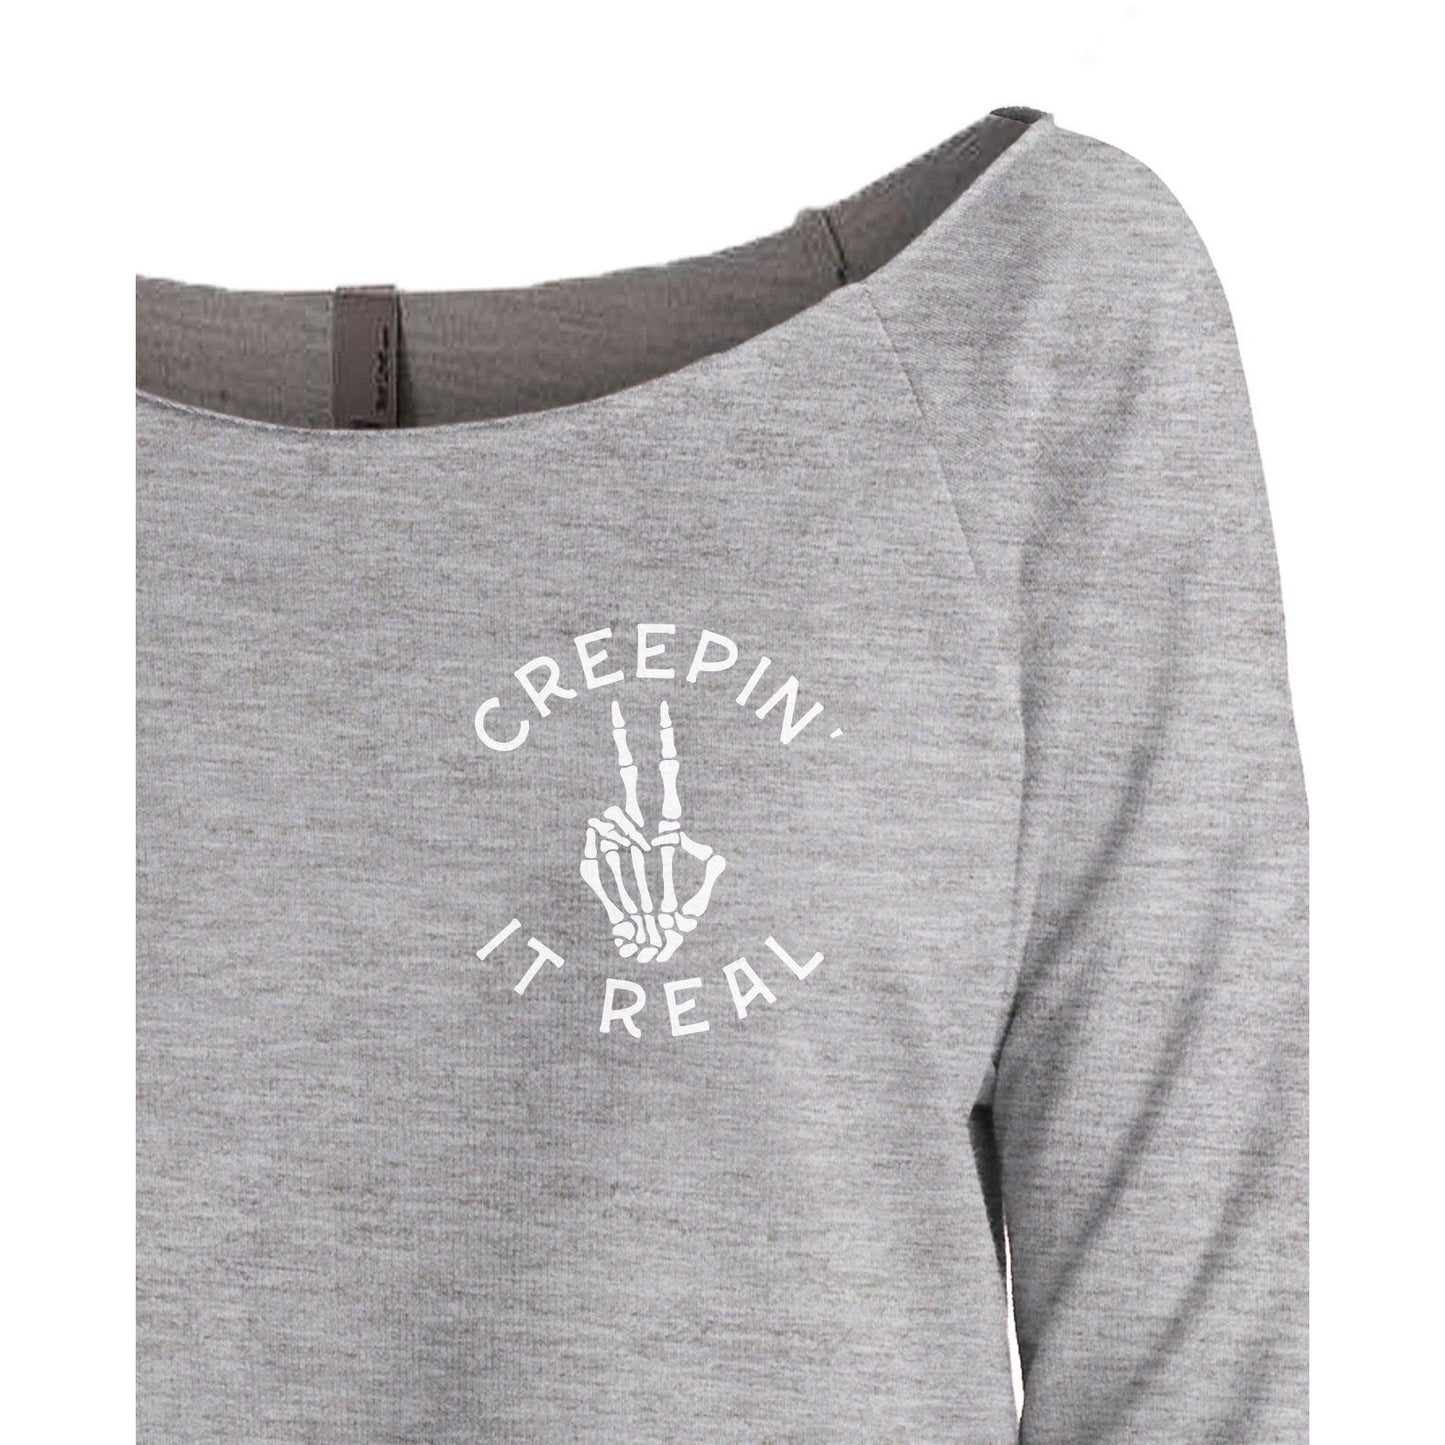 Creepin It Real Women's Graphic Printed Lightweight Slouchy 3/4 Sleeves Sweatshirt Sport Grey Closeup